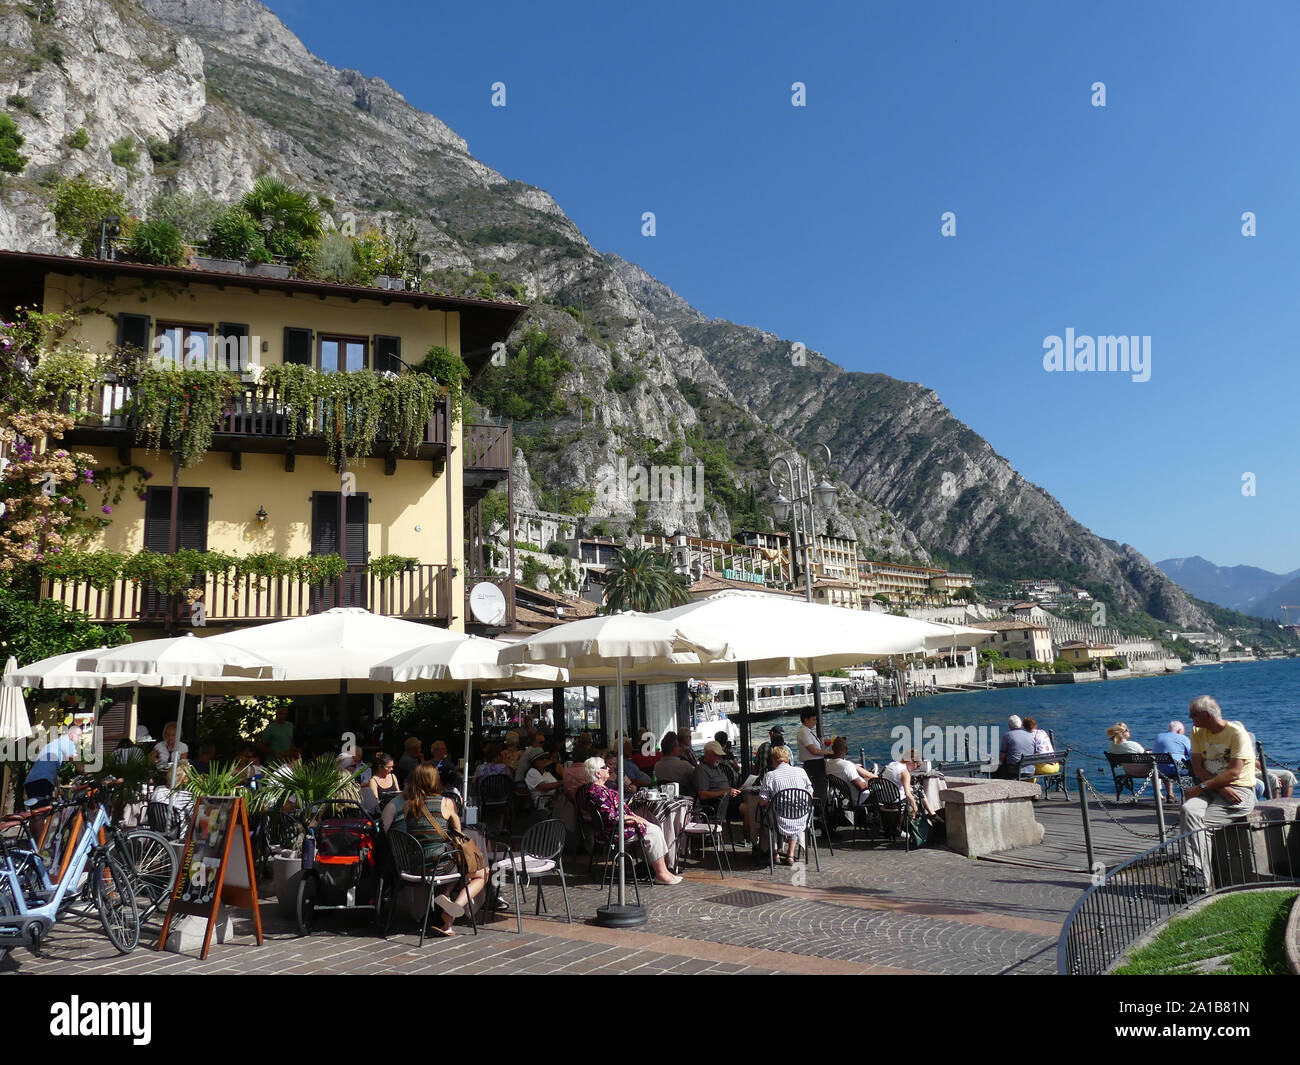 LIMONE on Lake Garda, north Italy. Photo: Tony Gale Stock Photo